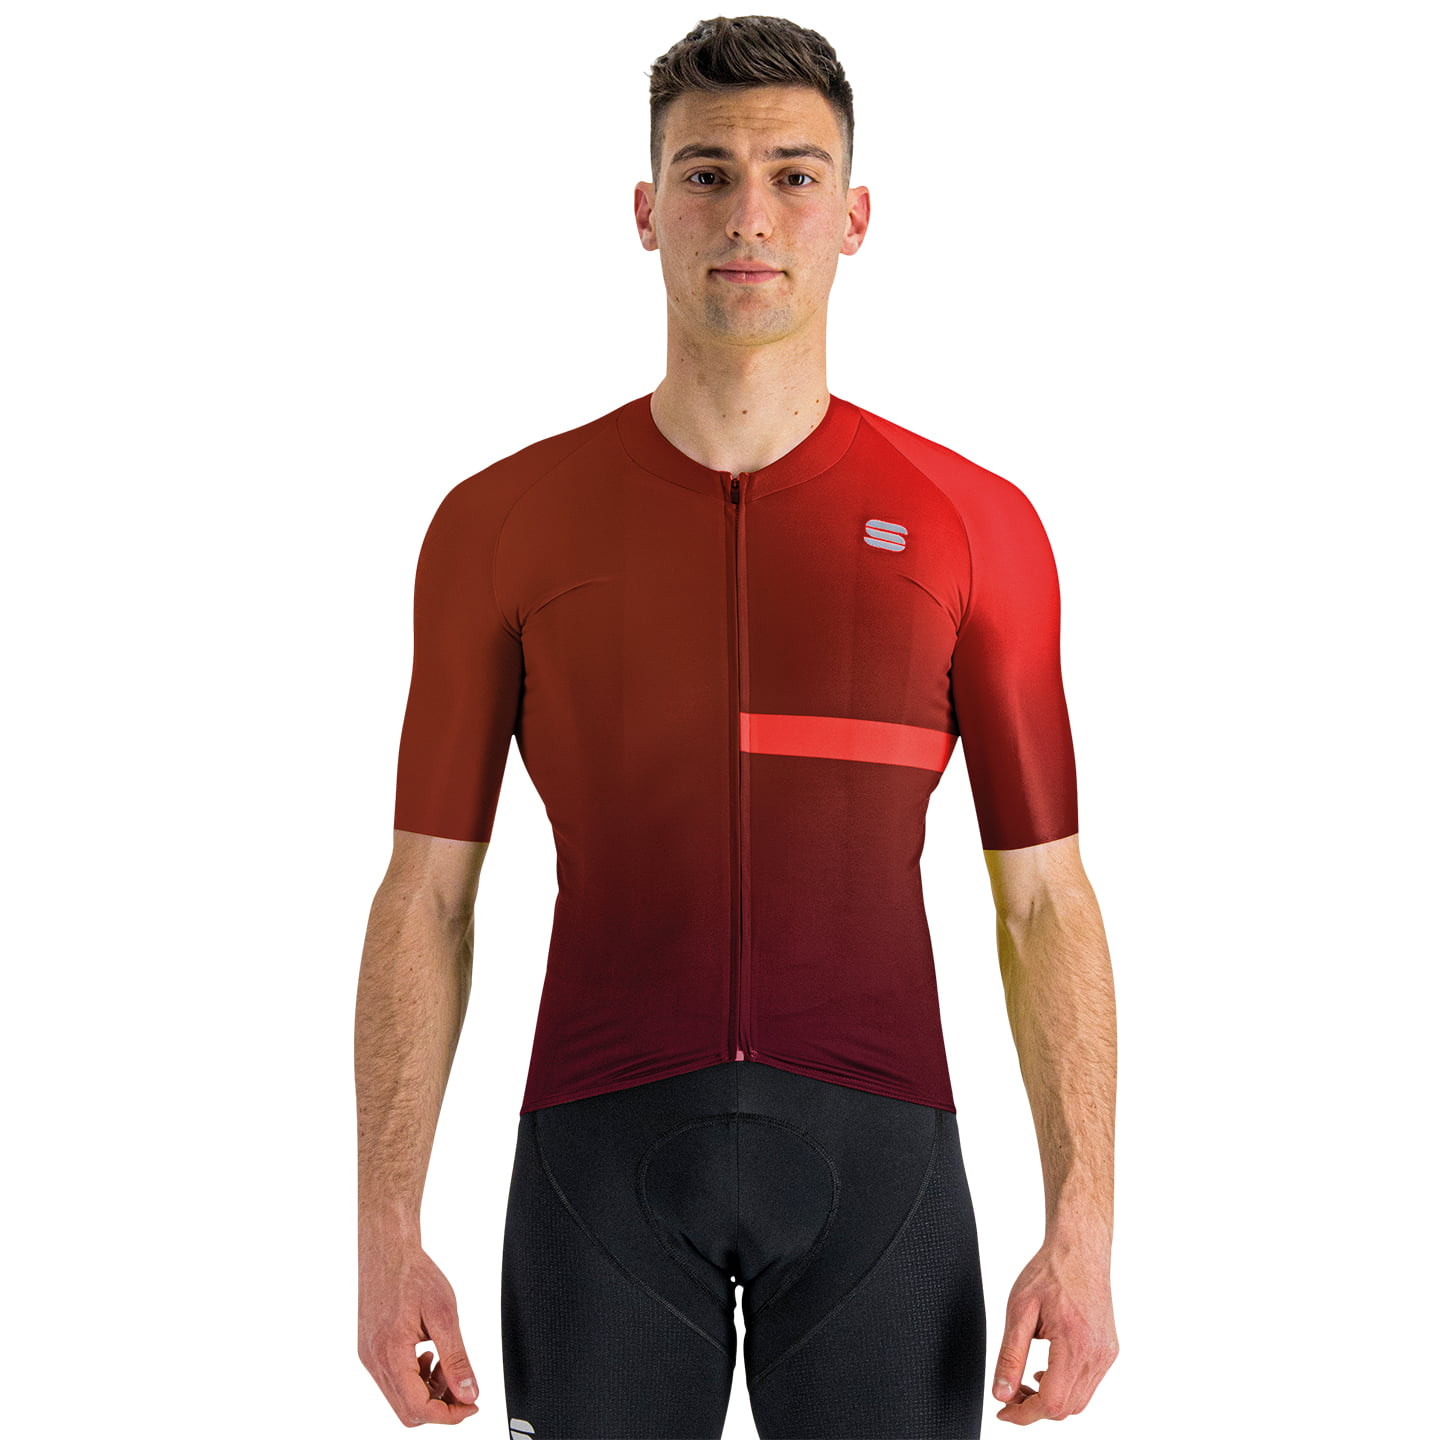 SPORTFUL Bomber Short Sleeve Jersey Short Sleeve Jersey, for men, size M, Cycling jersey, Cycling clothing